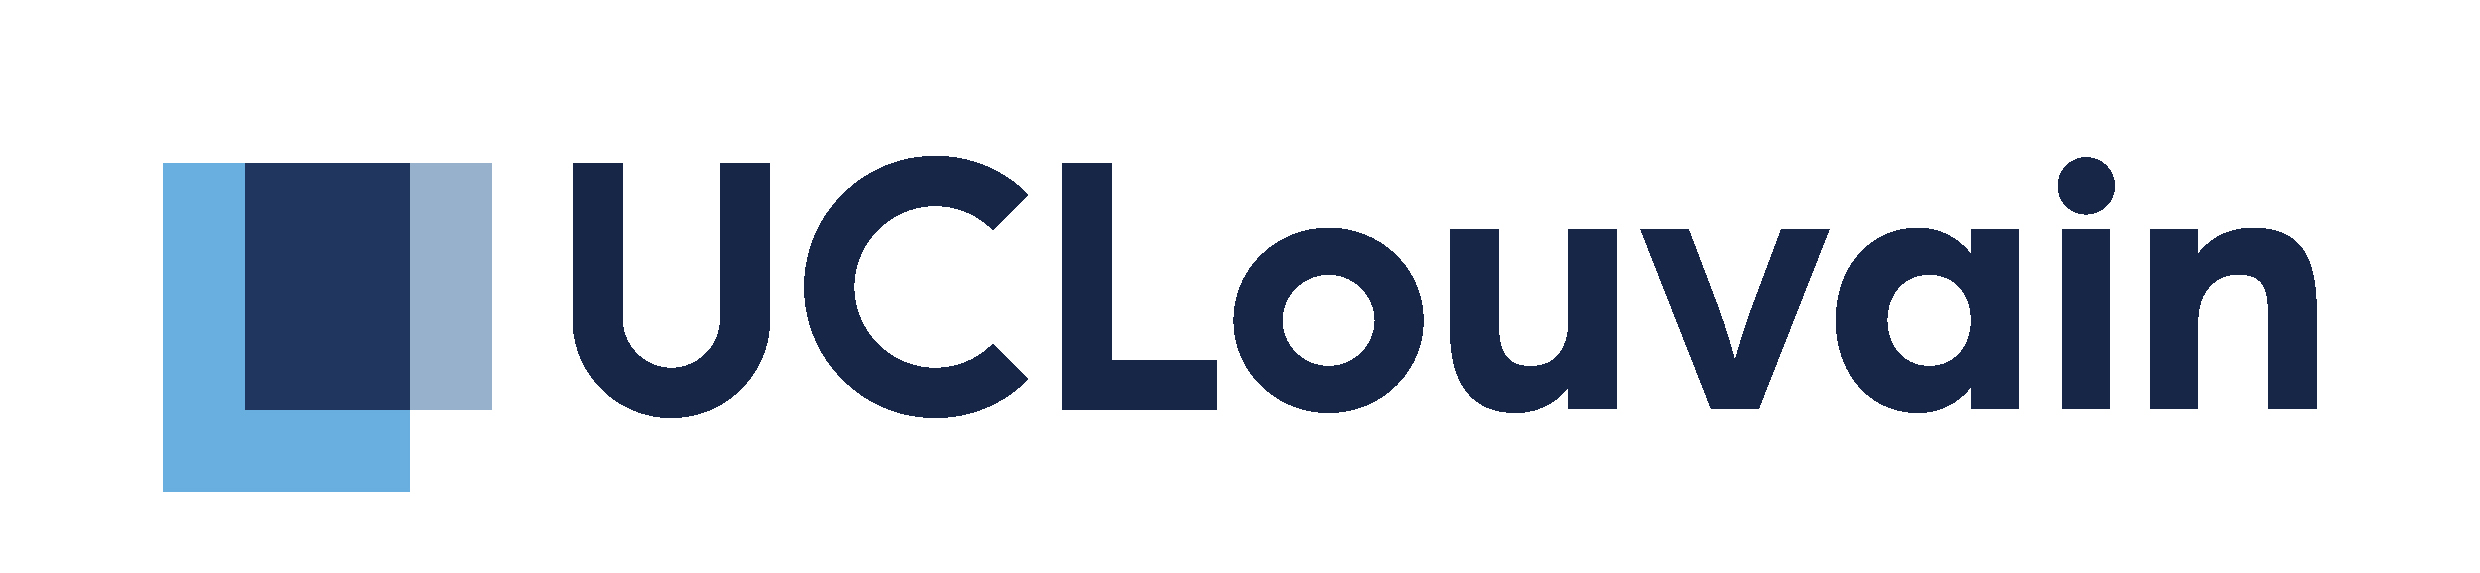 UCLouvain_logo